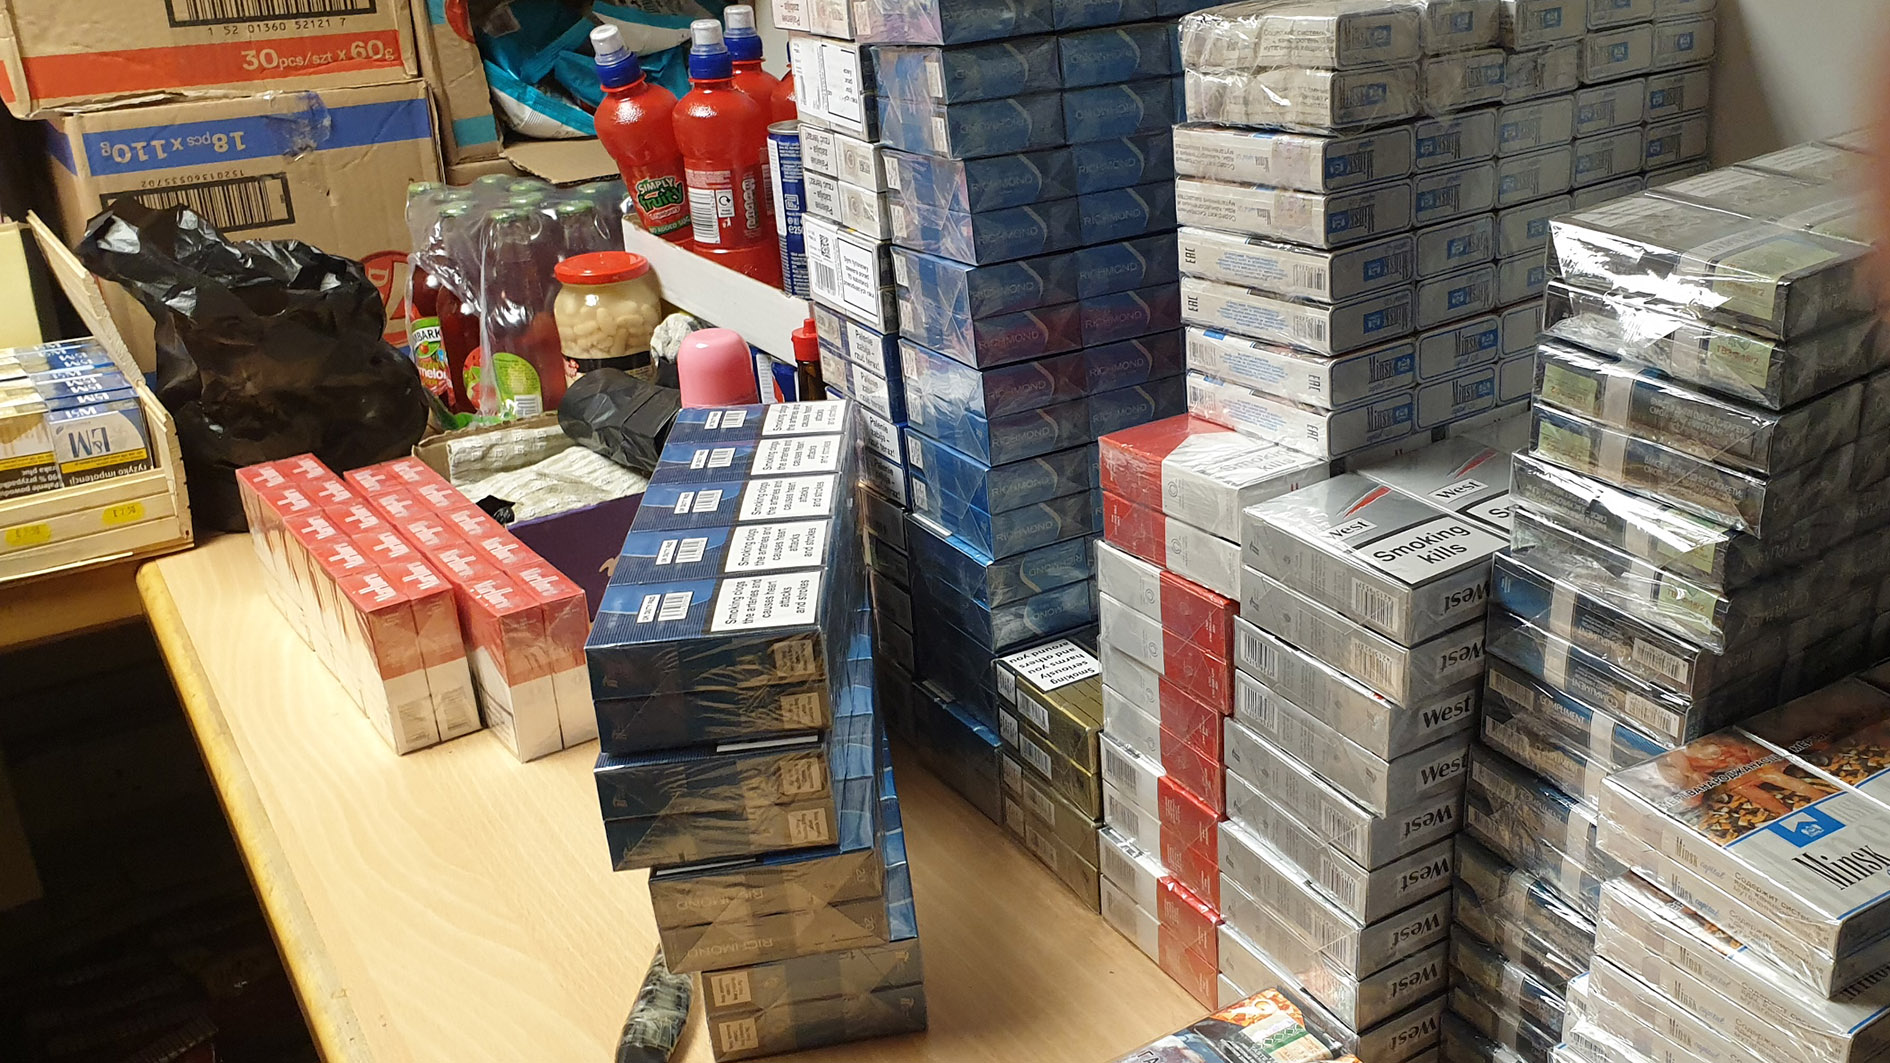 Boston shop raid - stacks of illegal cigarettes